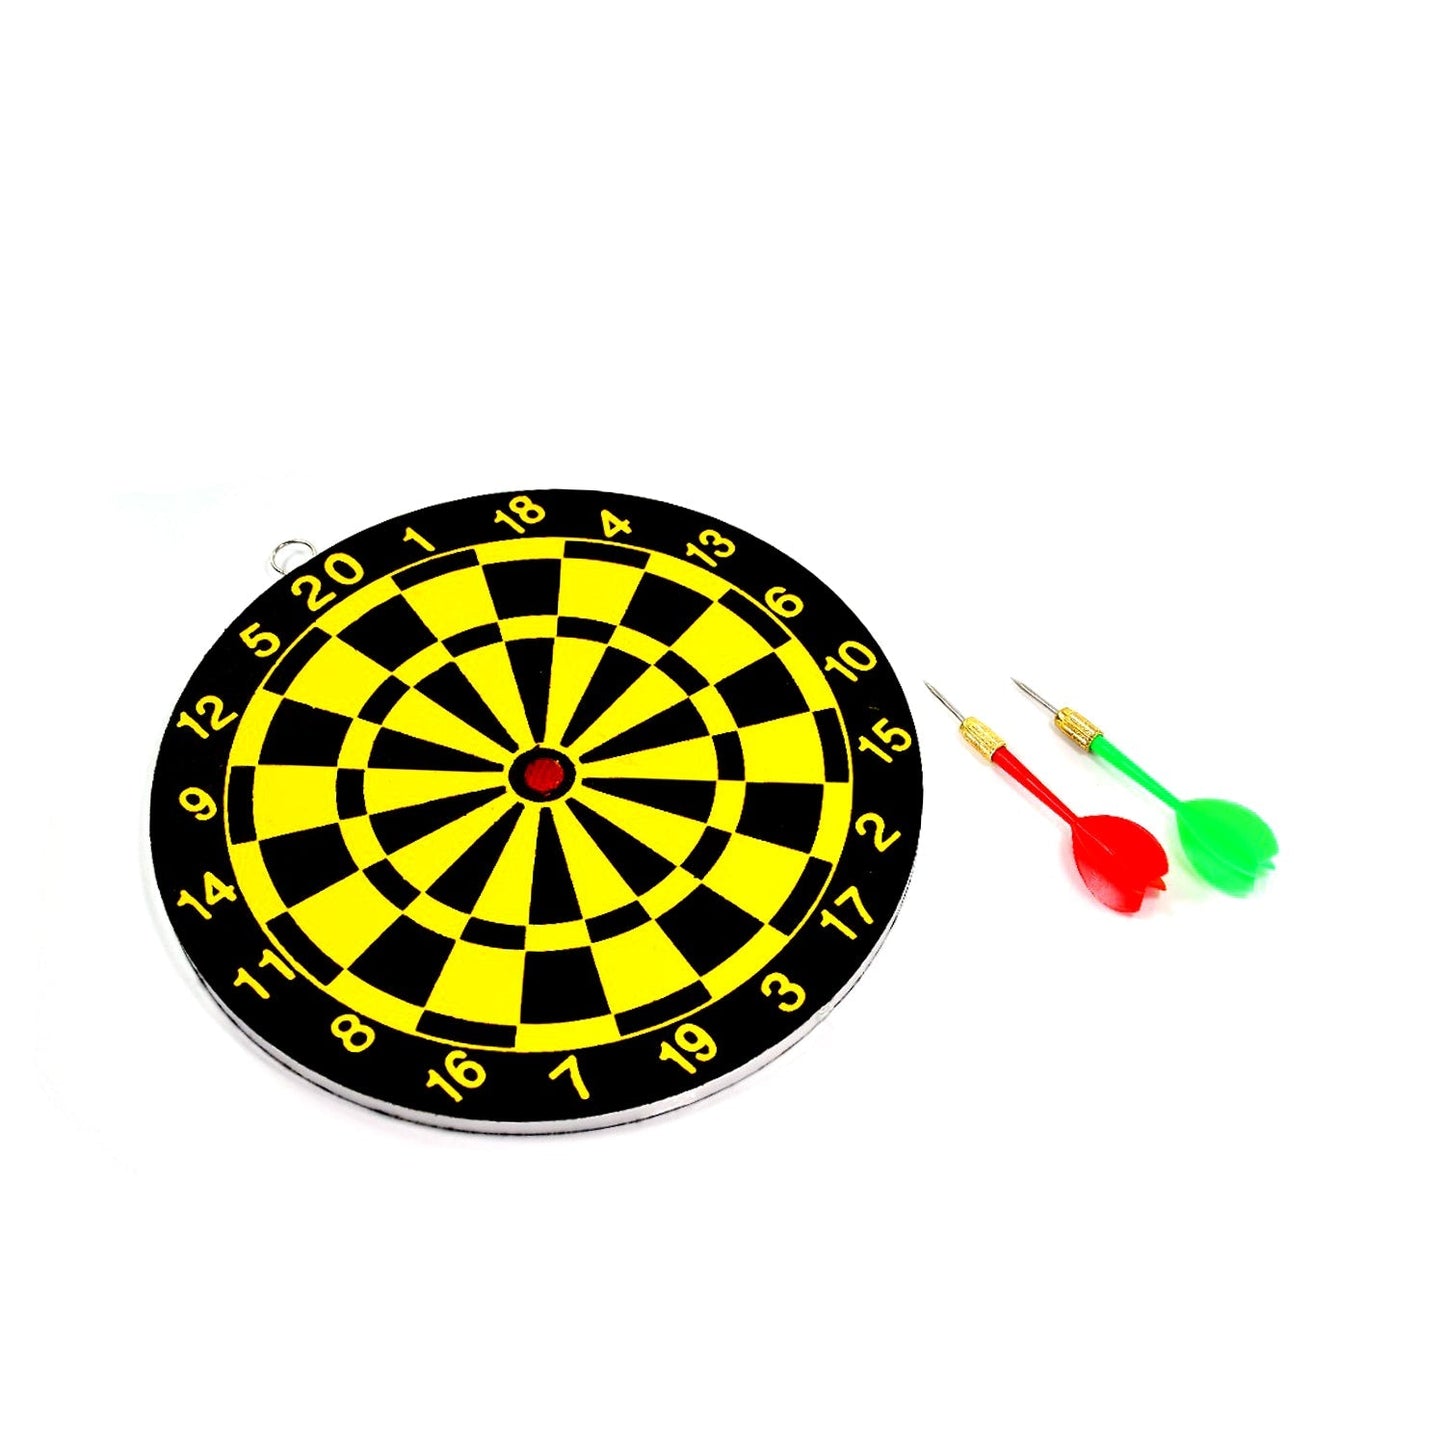 4896 Small Dart Board with 2 Darts Set for Kids Children. Indoor Sports Games Board Game Dart Board Board Game. DeoDap